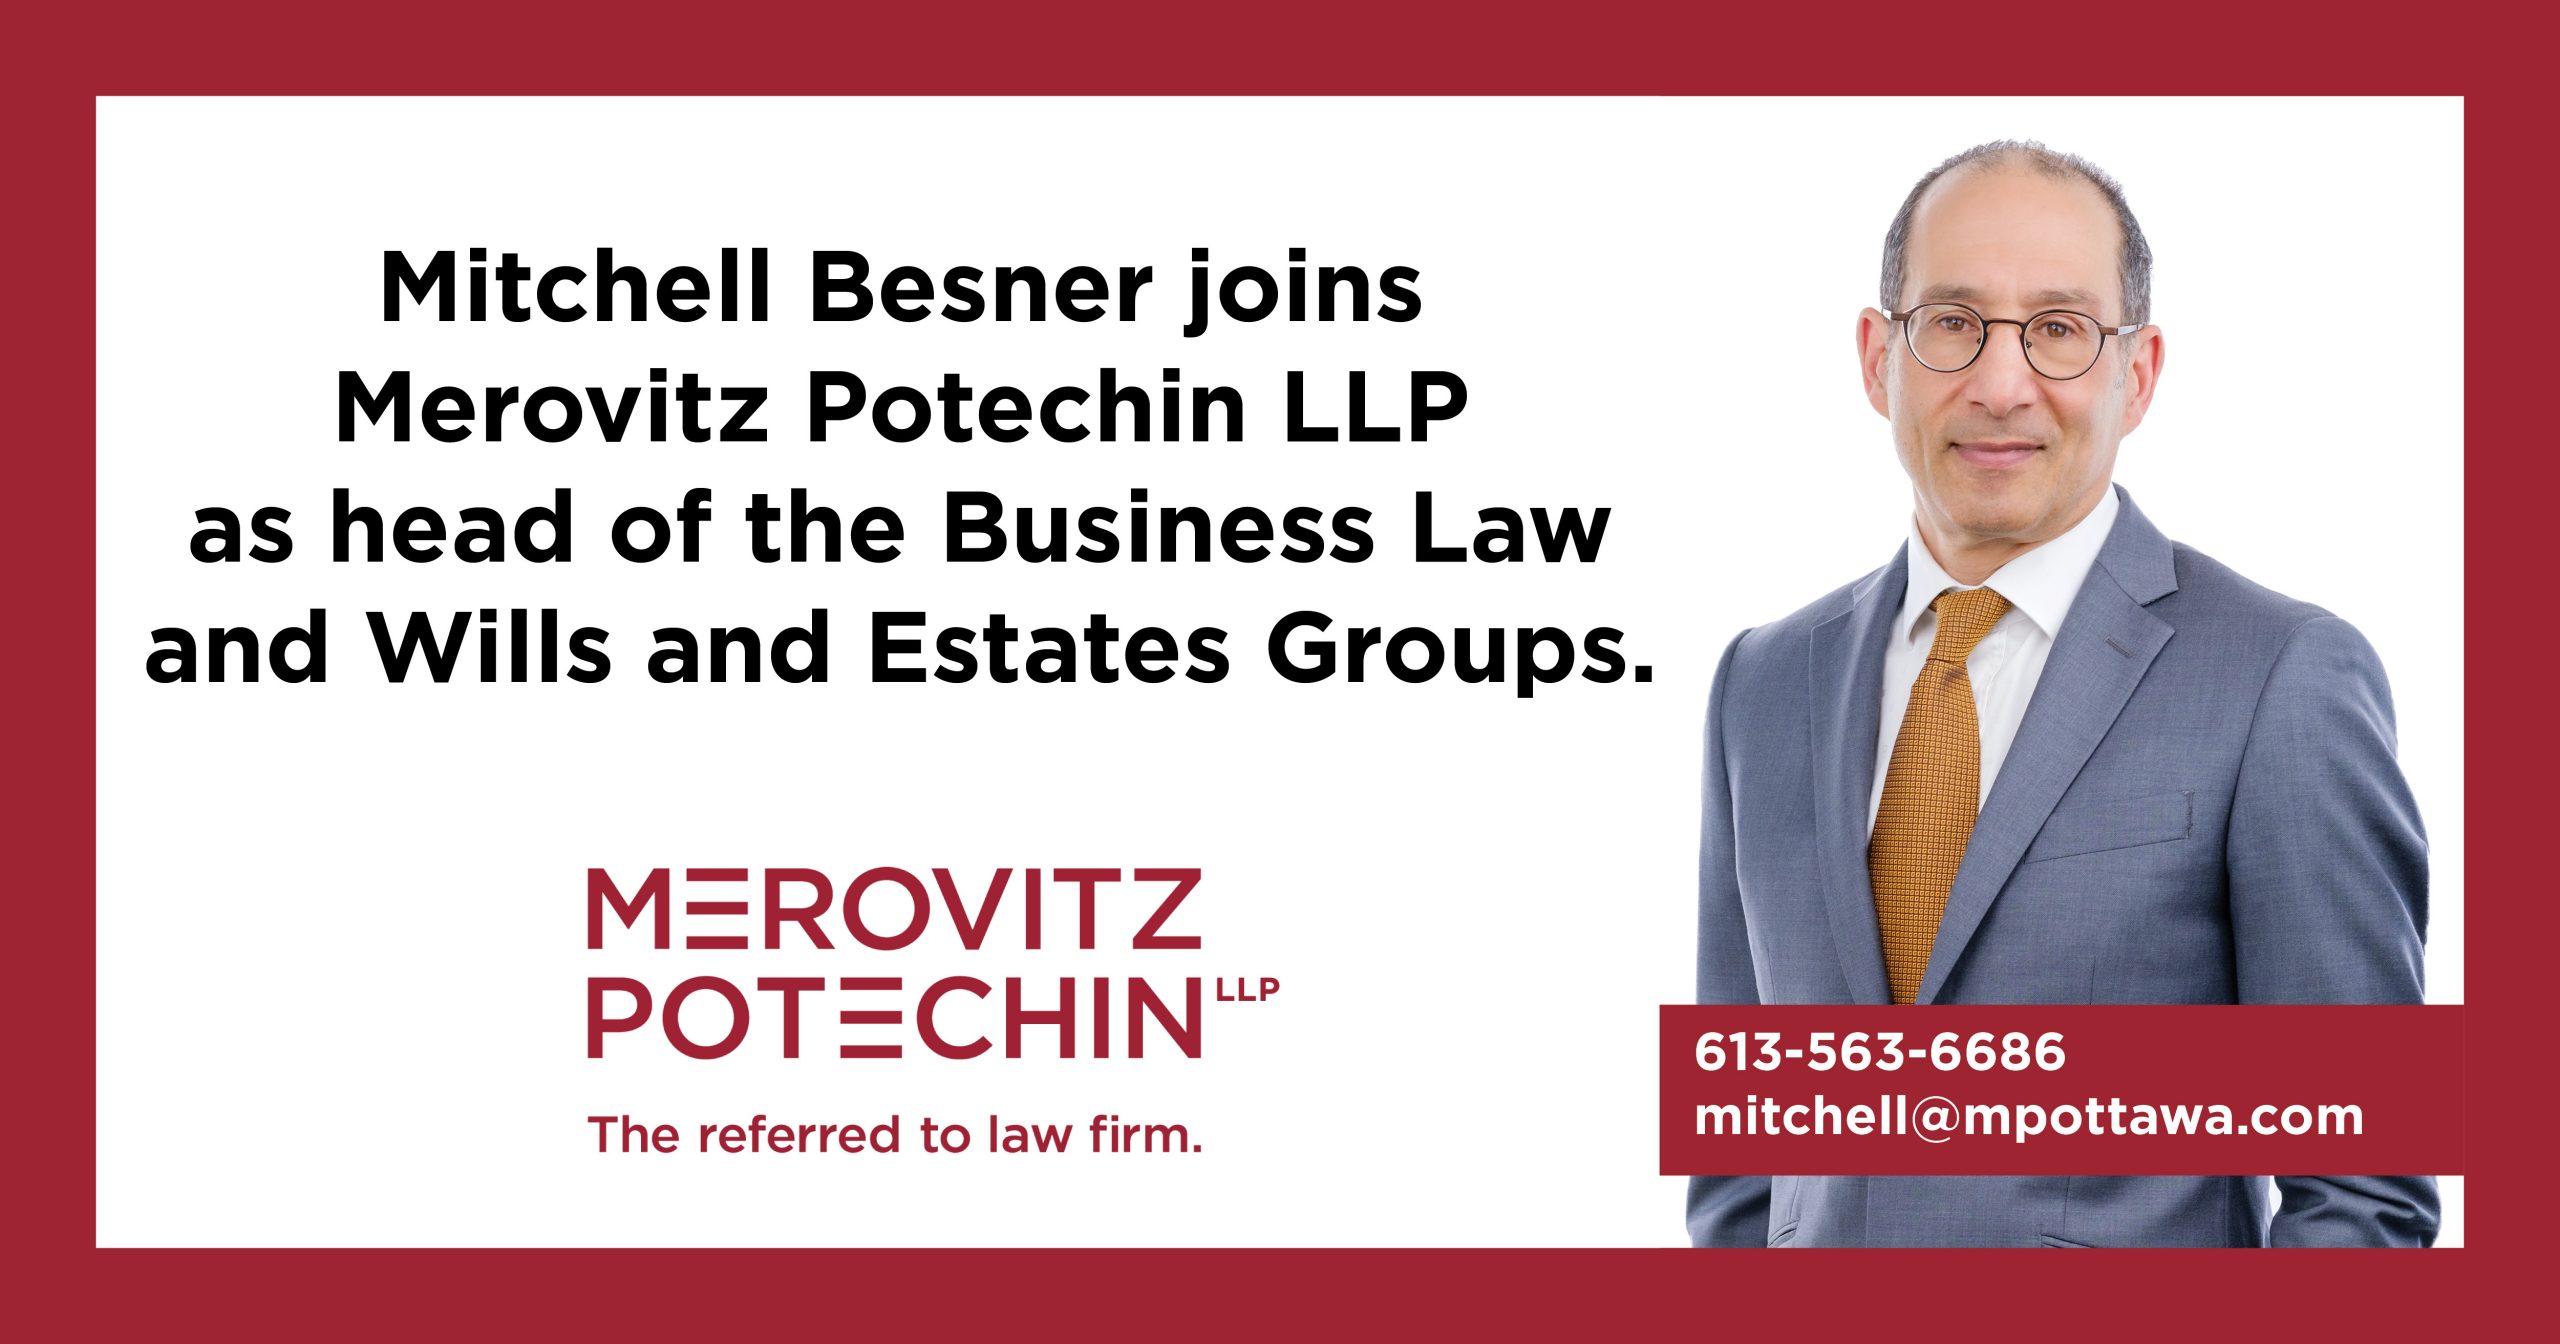 Mitchell Besner joins Merovitz Potechin LLP